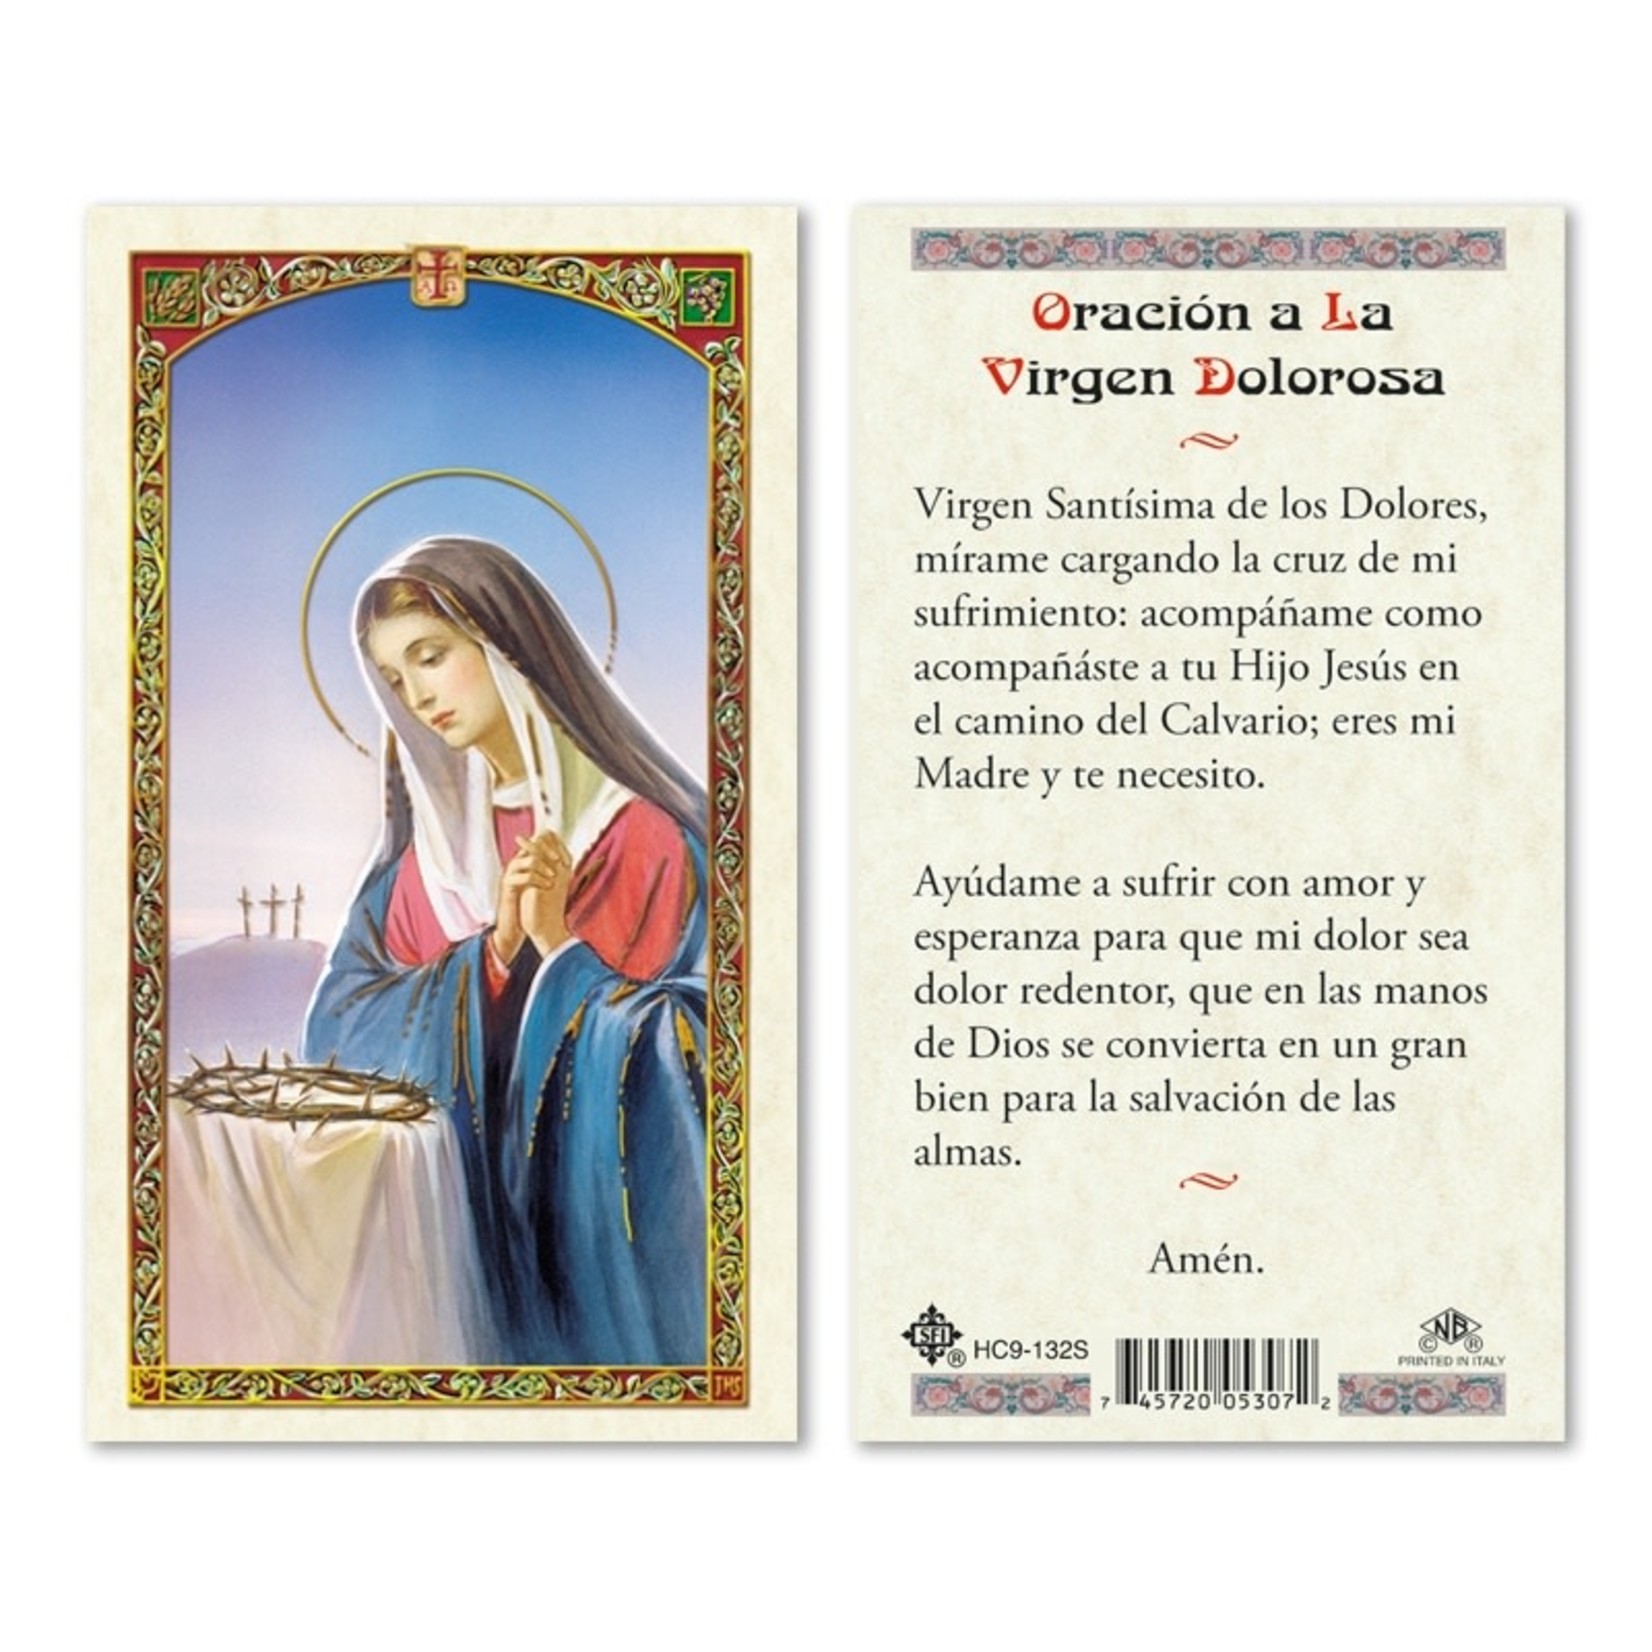 Oracion a la Virgen Dolorosa Prayer Card (Spanish)